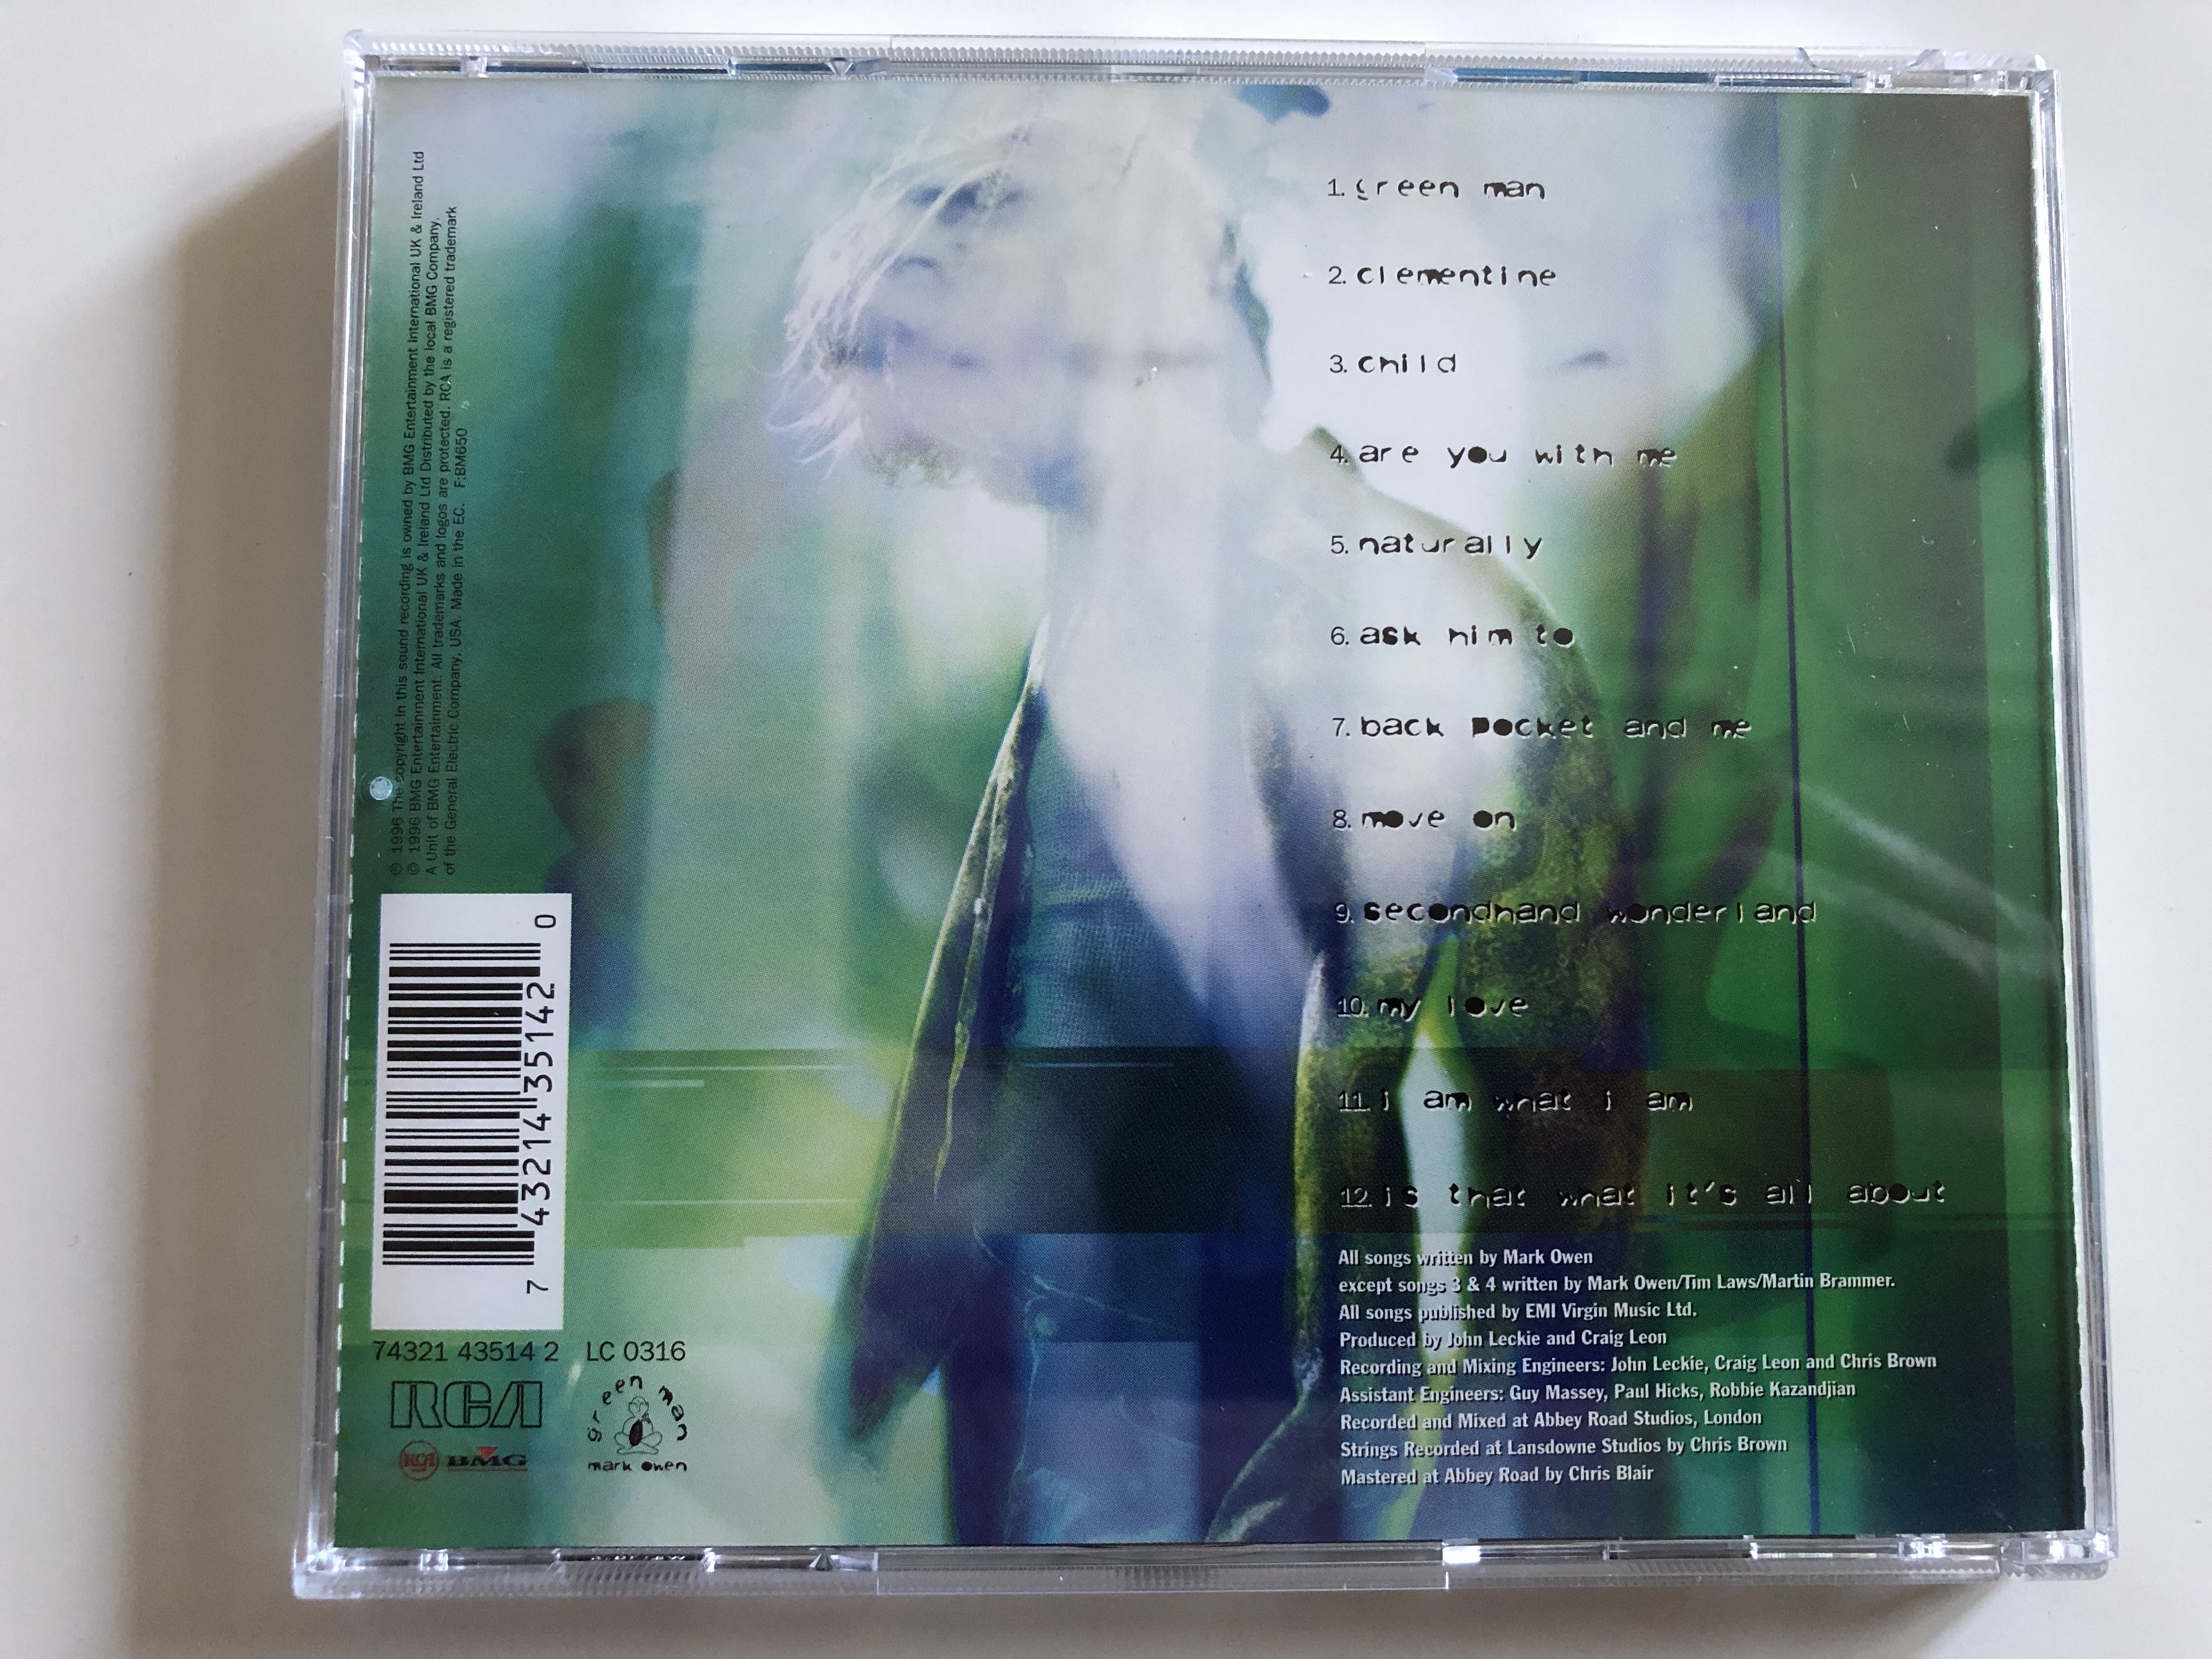 mark-owen-green-man-rca-audio-cd-1996-74321-43514-2-6-.jpg